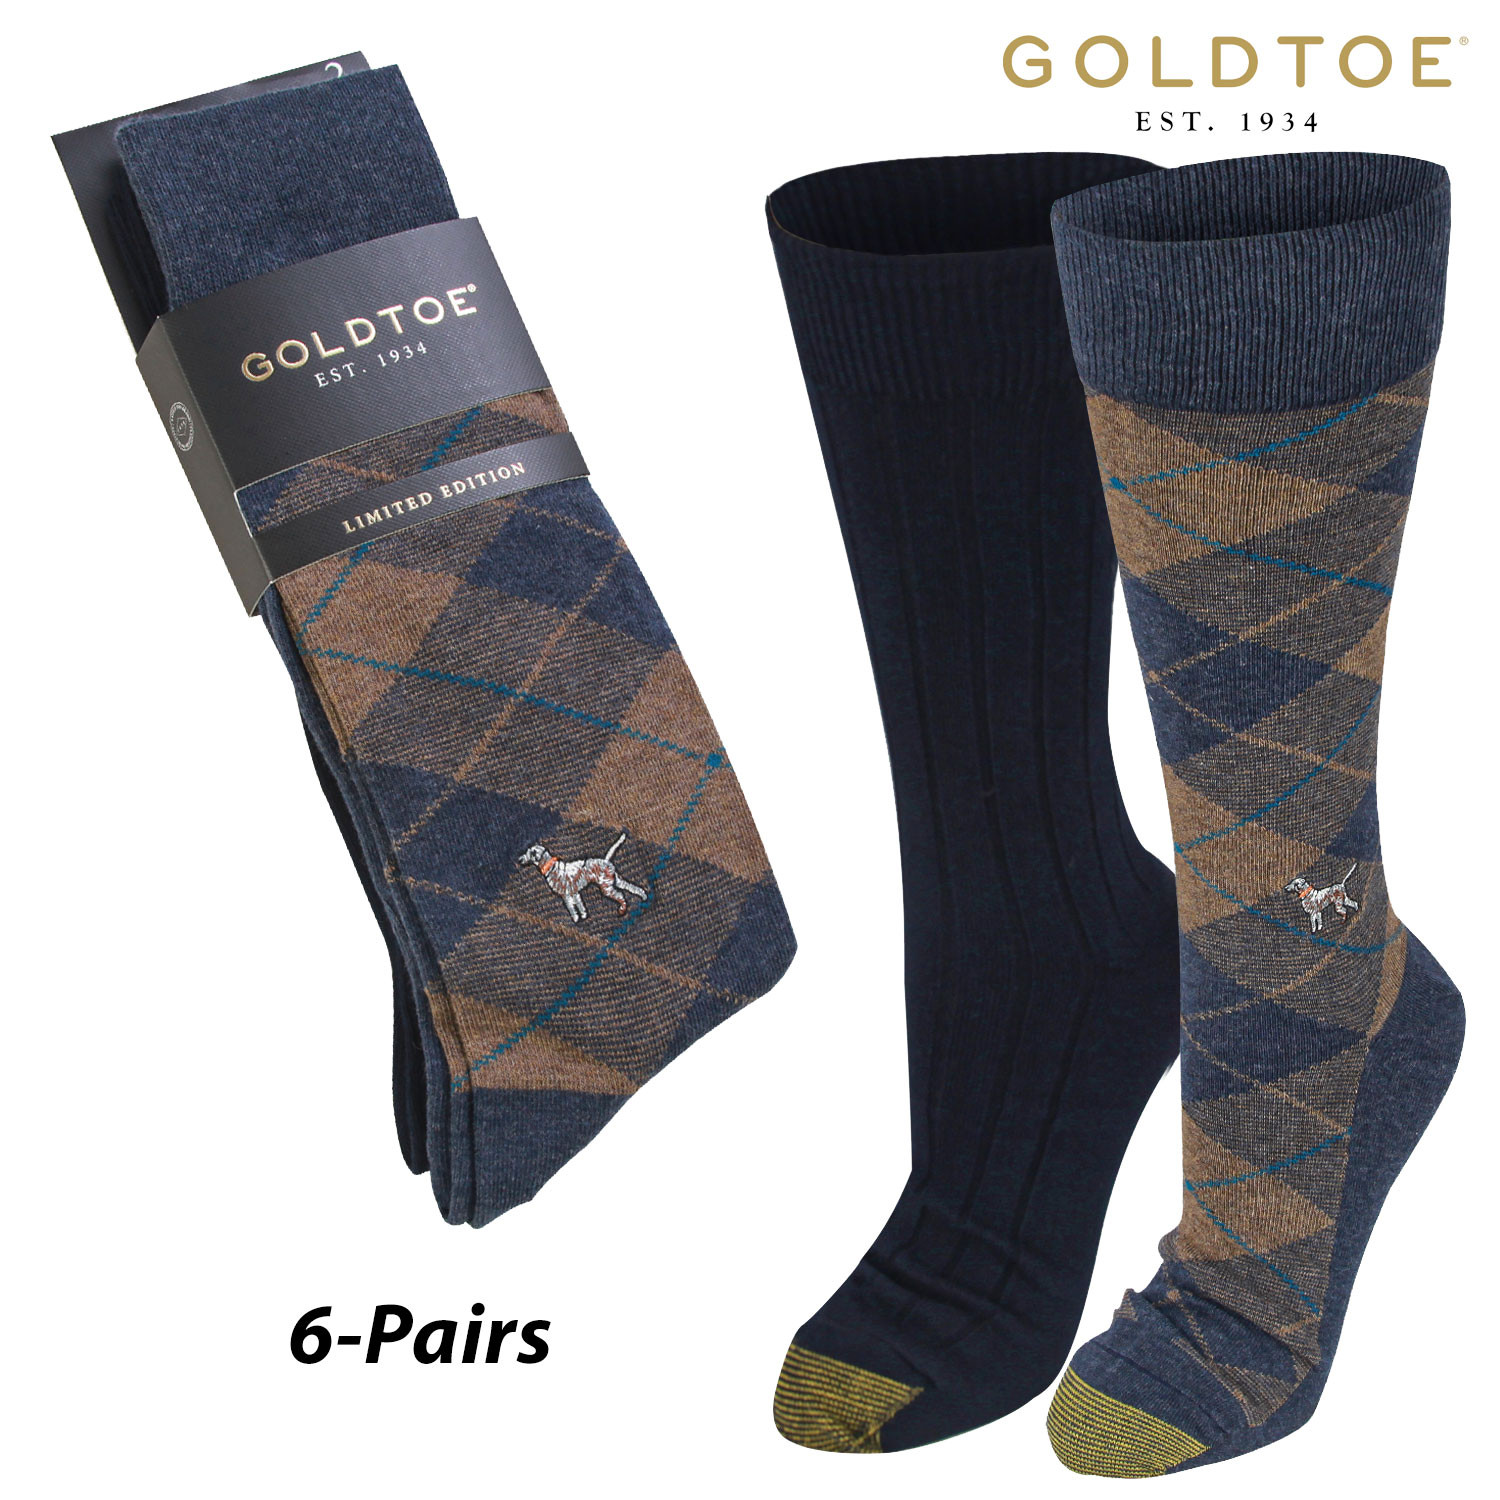 6-Pairs Men's Gold Toe Dog & Blackwatch Ribbed Crew Socks (L) $12 + Free Shipping